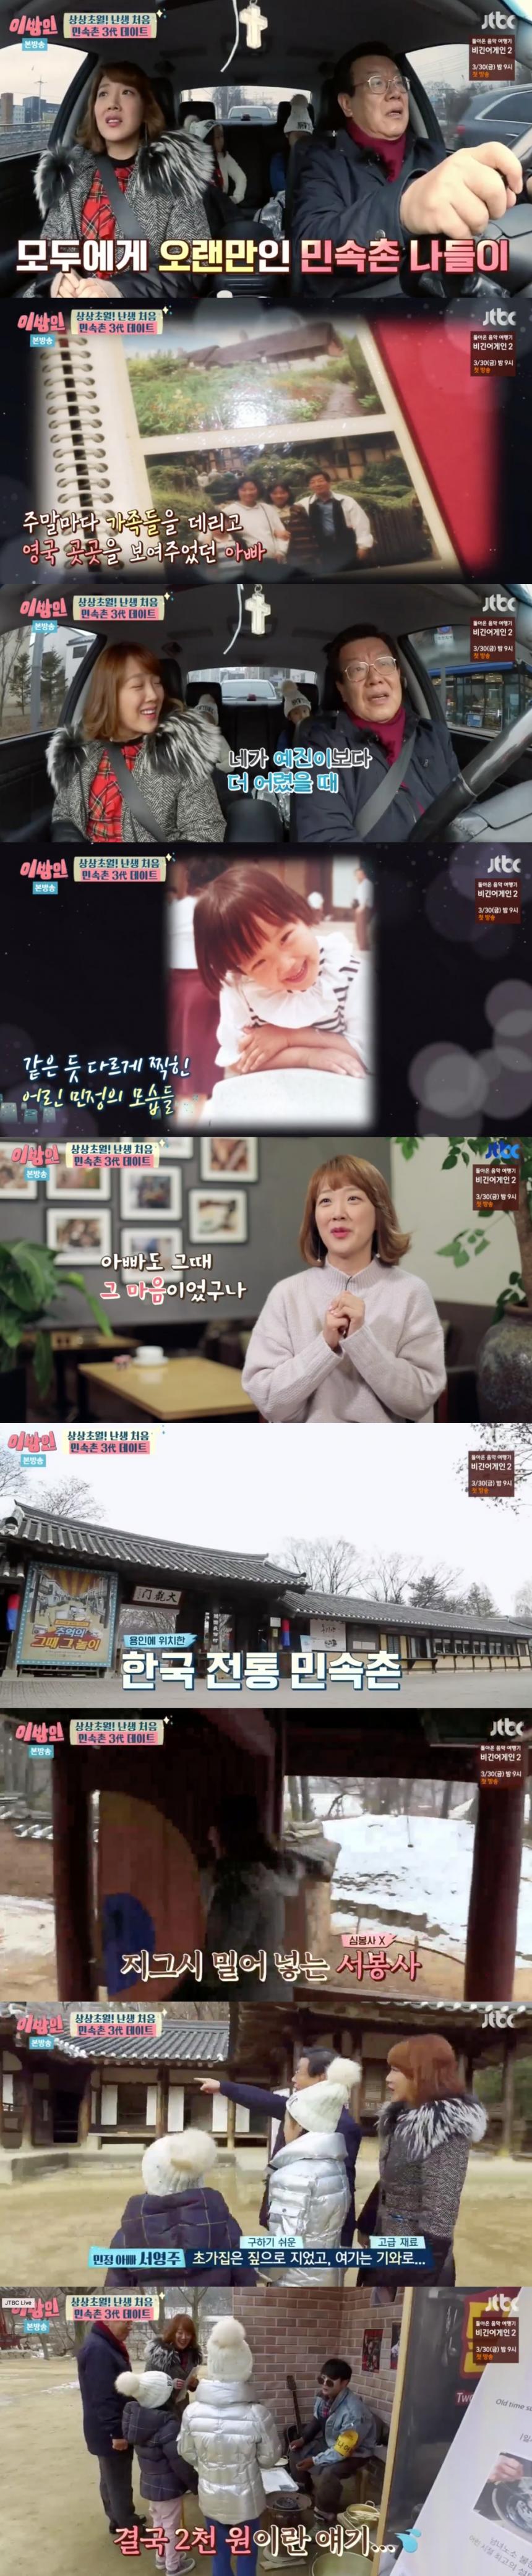 JTBC ‘이방인’ 방송캡쳐